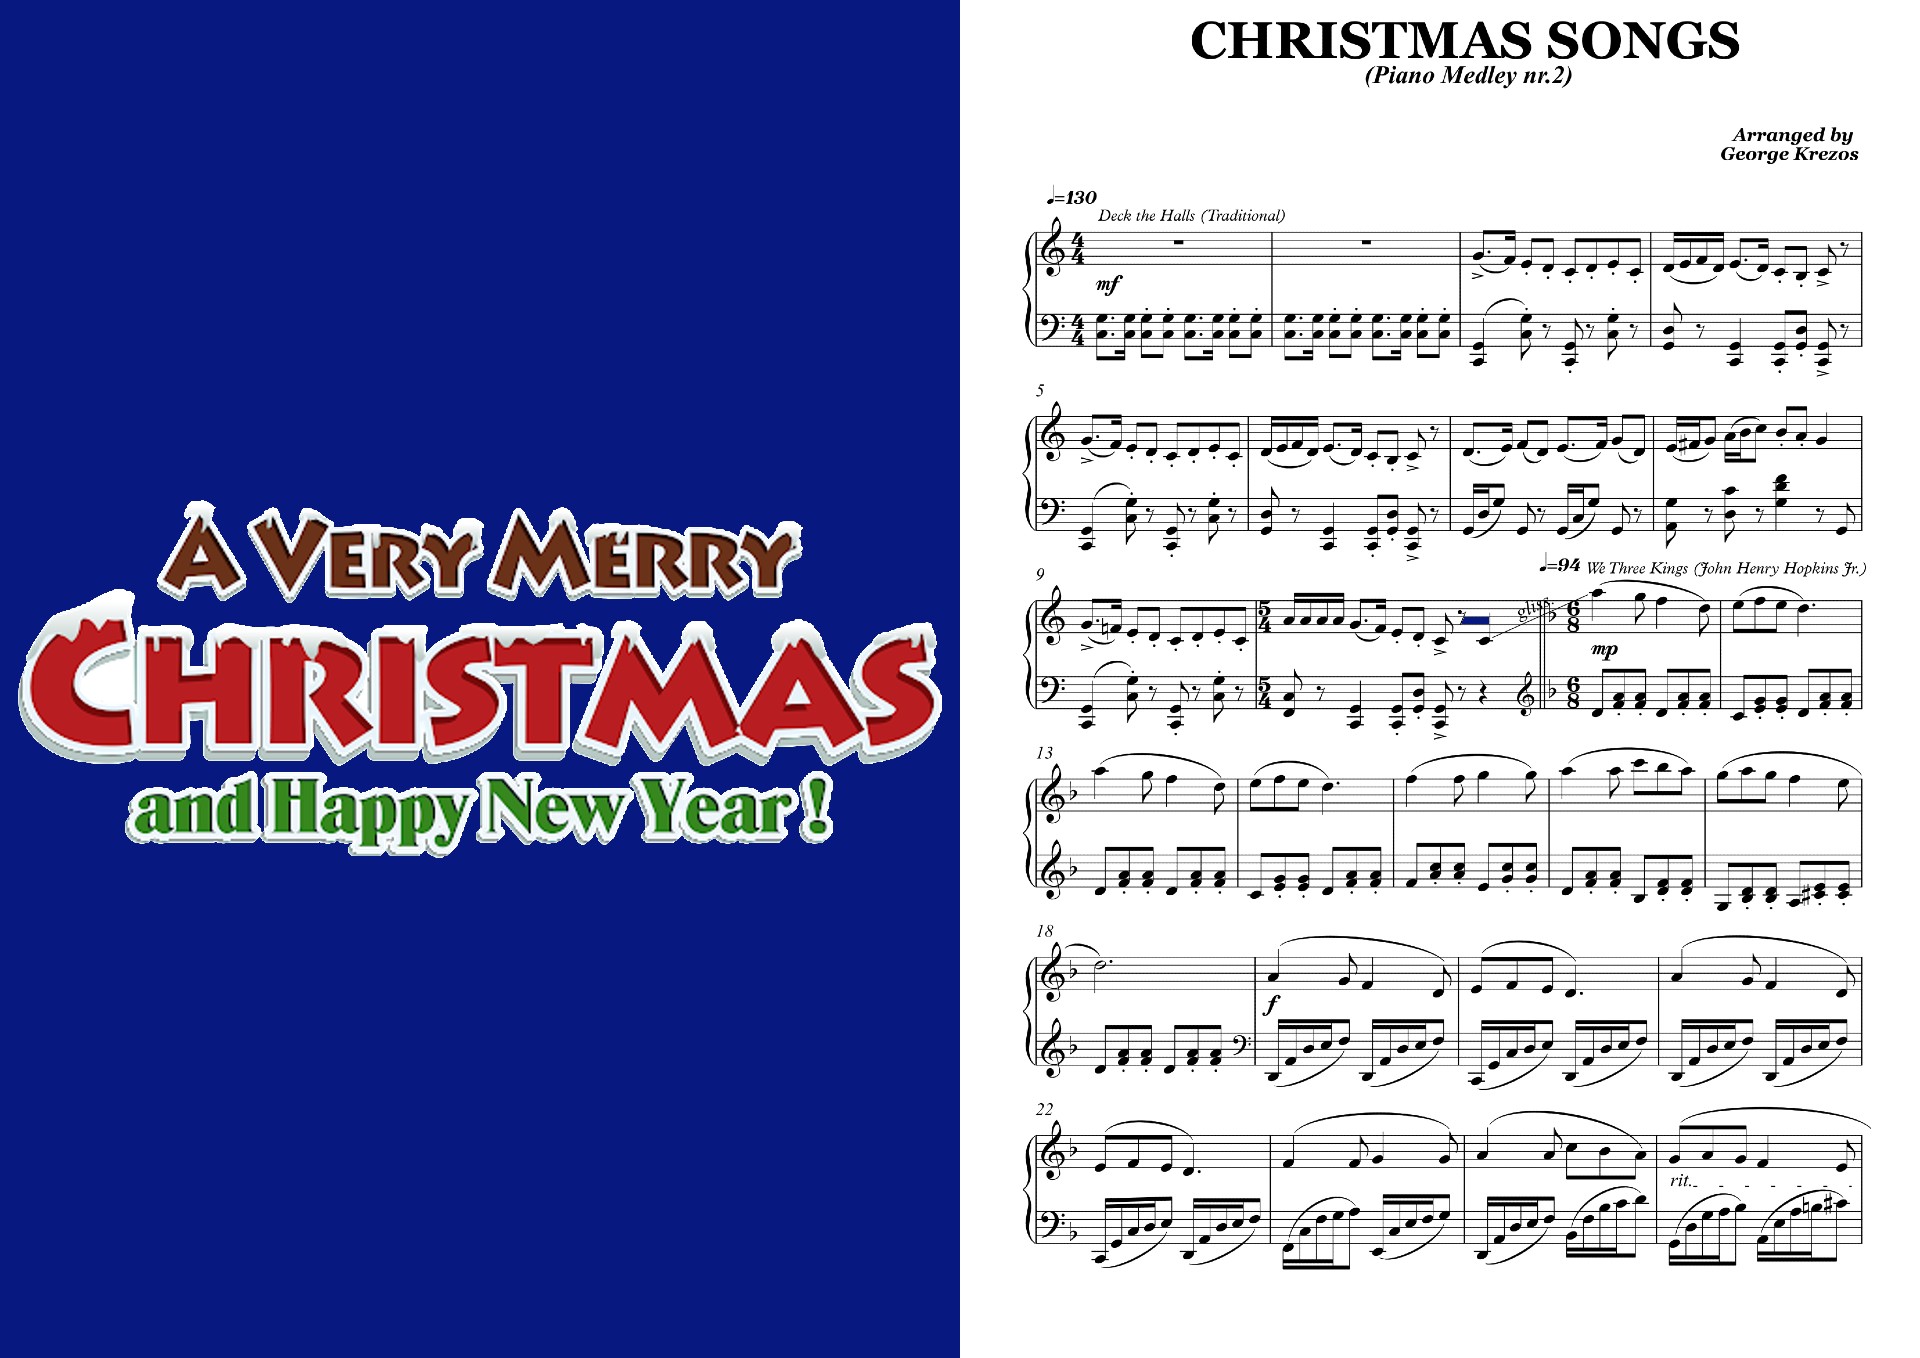 Christmas Songs Medley 2 - Arranged by George Krezos.jpg